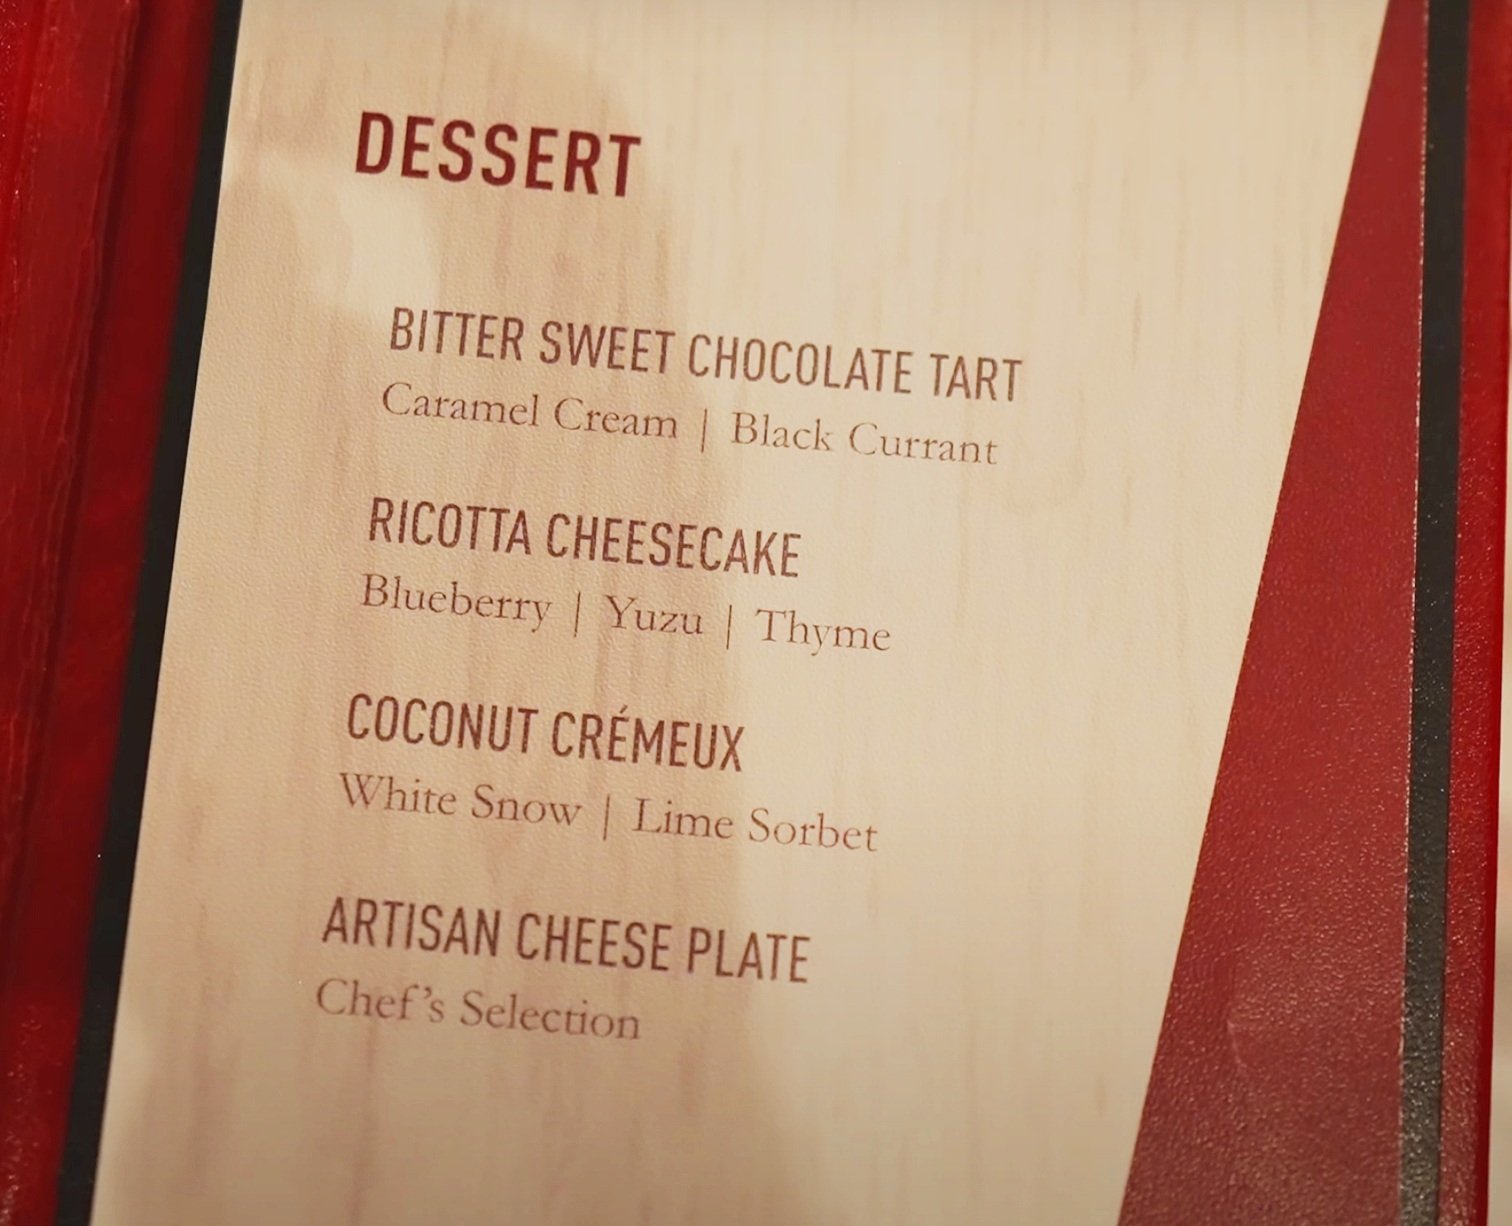  Sample dessert menu 